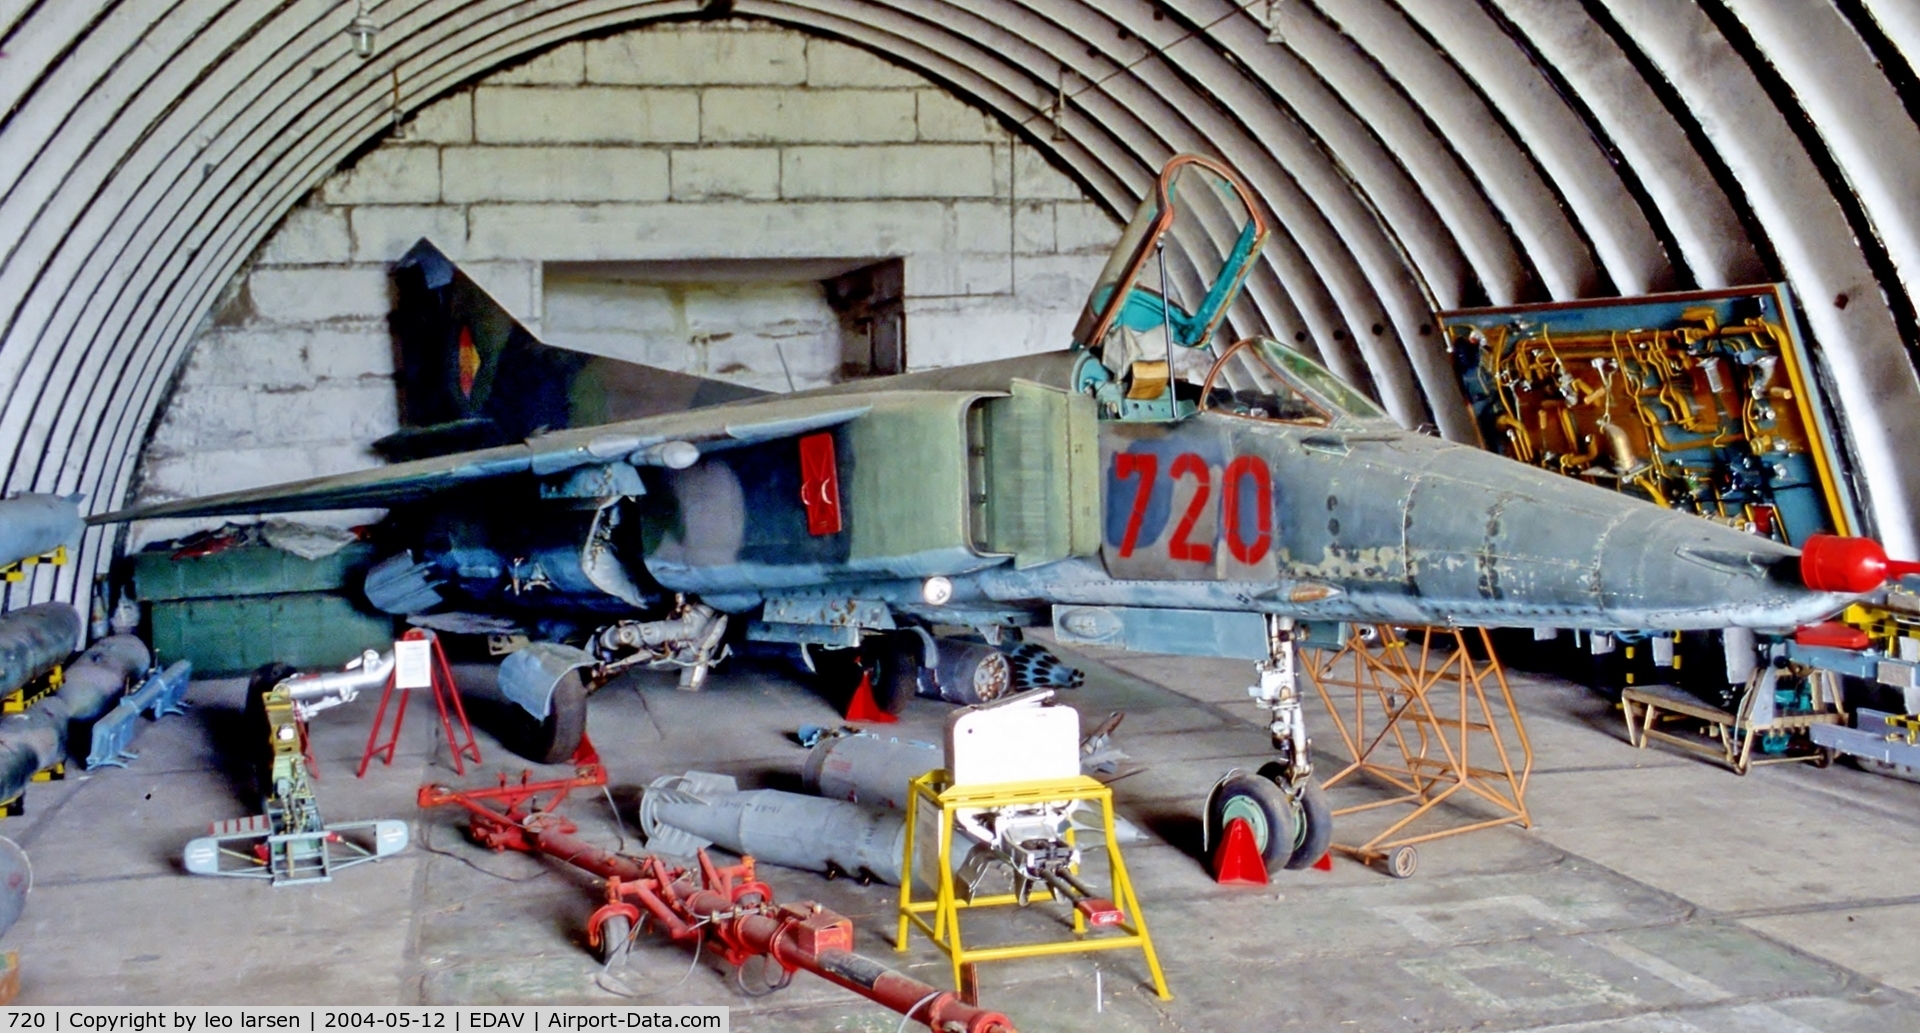 720, 1981 Mikoyan-Gurevich MiG-23BN C/N 039315732, Finow Air Museum Germany 12.5.04